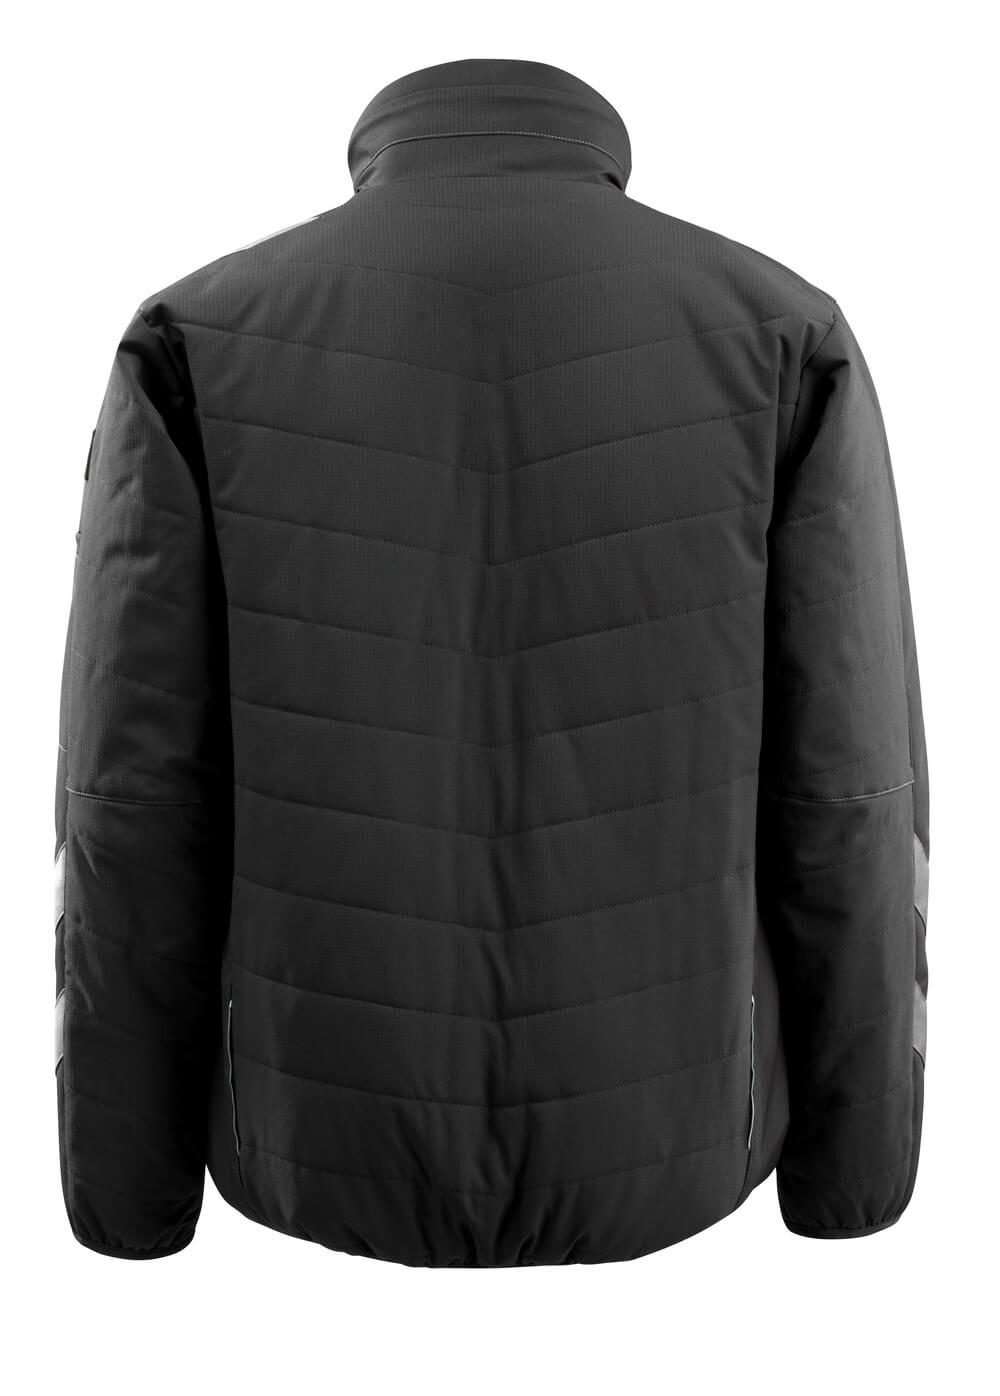 Mascot UNIQUE  Erding Thermal jacket 15715 black